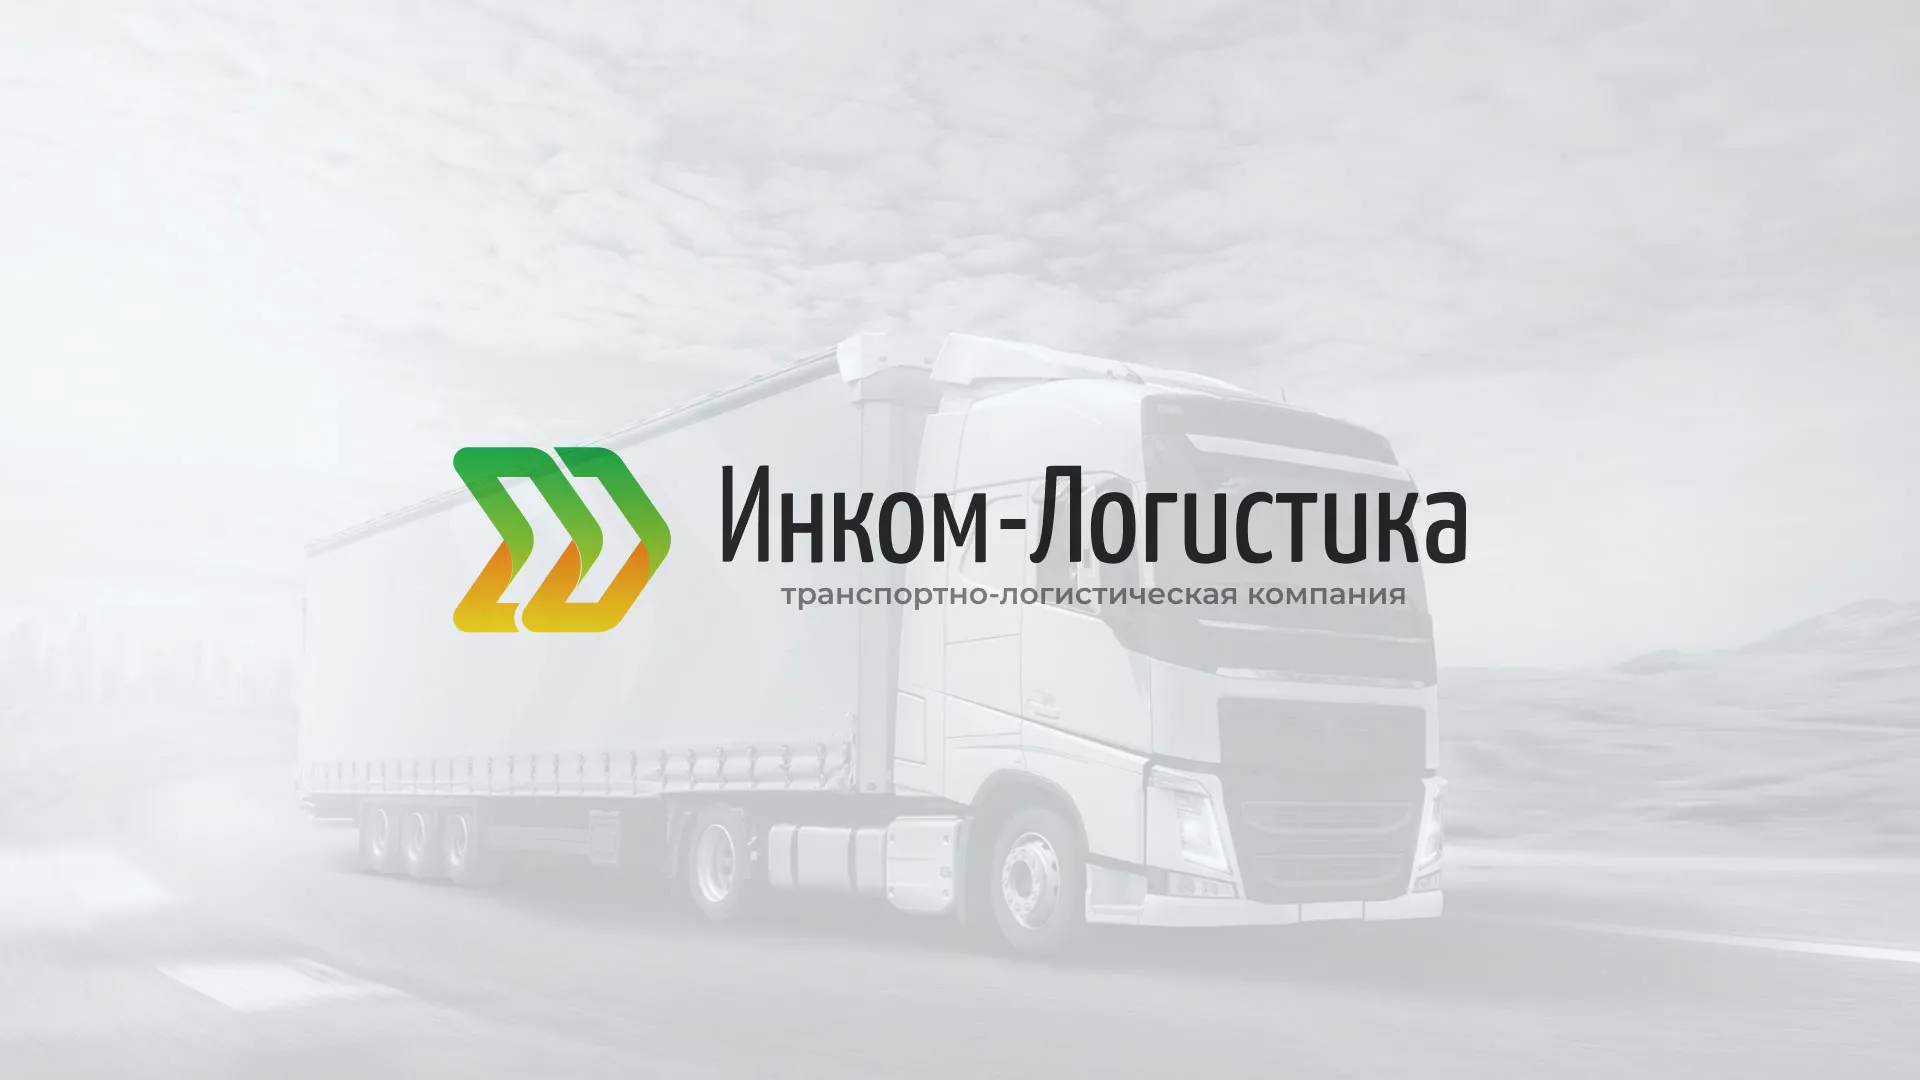 Разработка логотипа и сайта компании «Инком-Логистика» в Ворсме